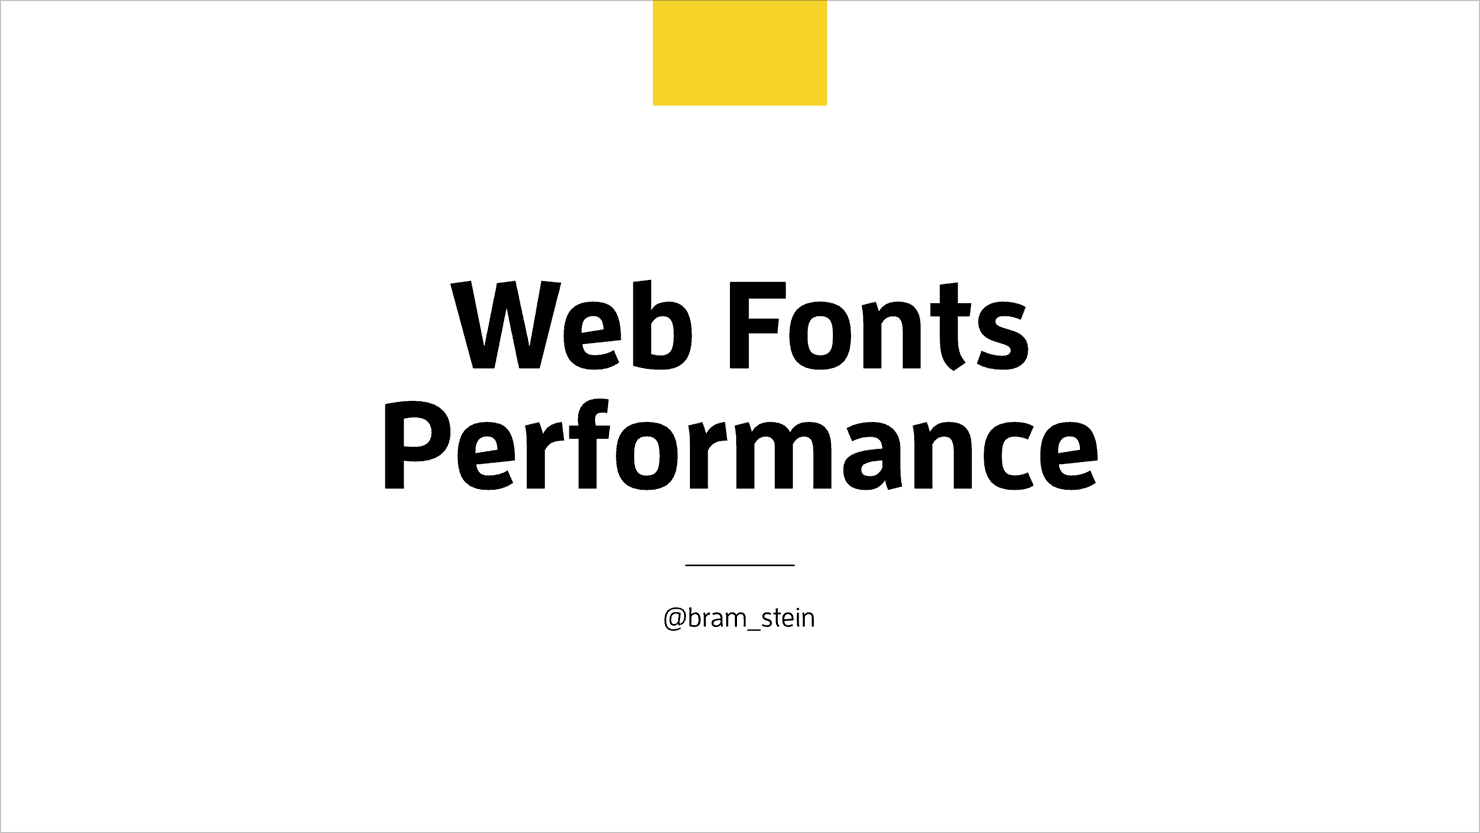 Web Fonts Performance opening slide